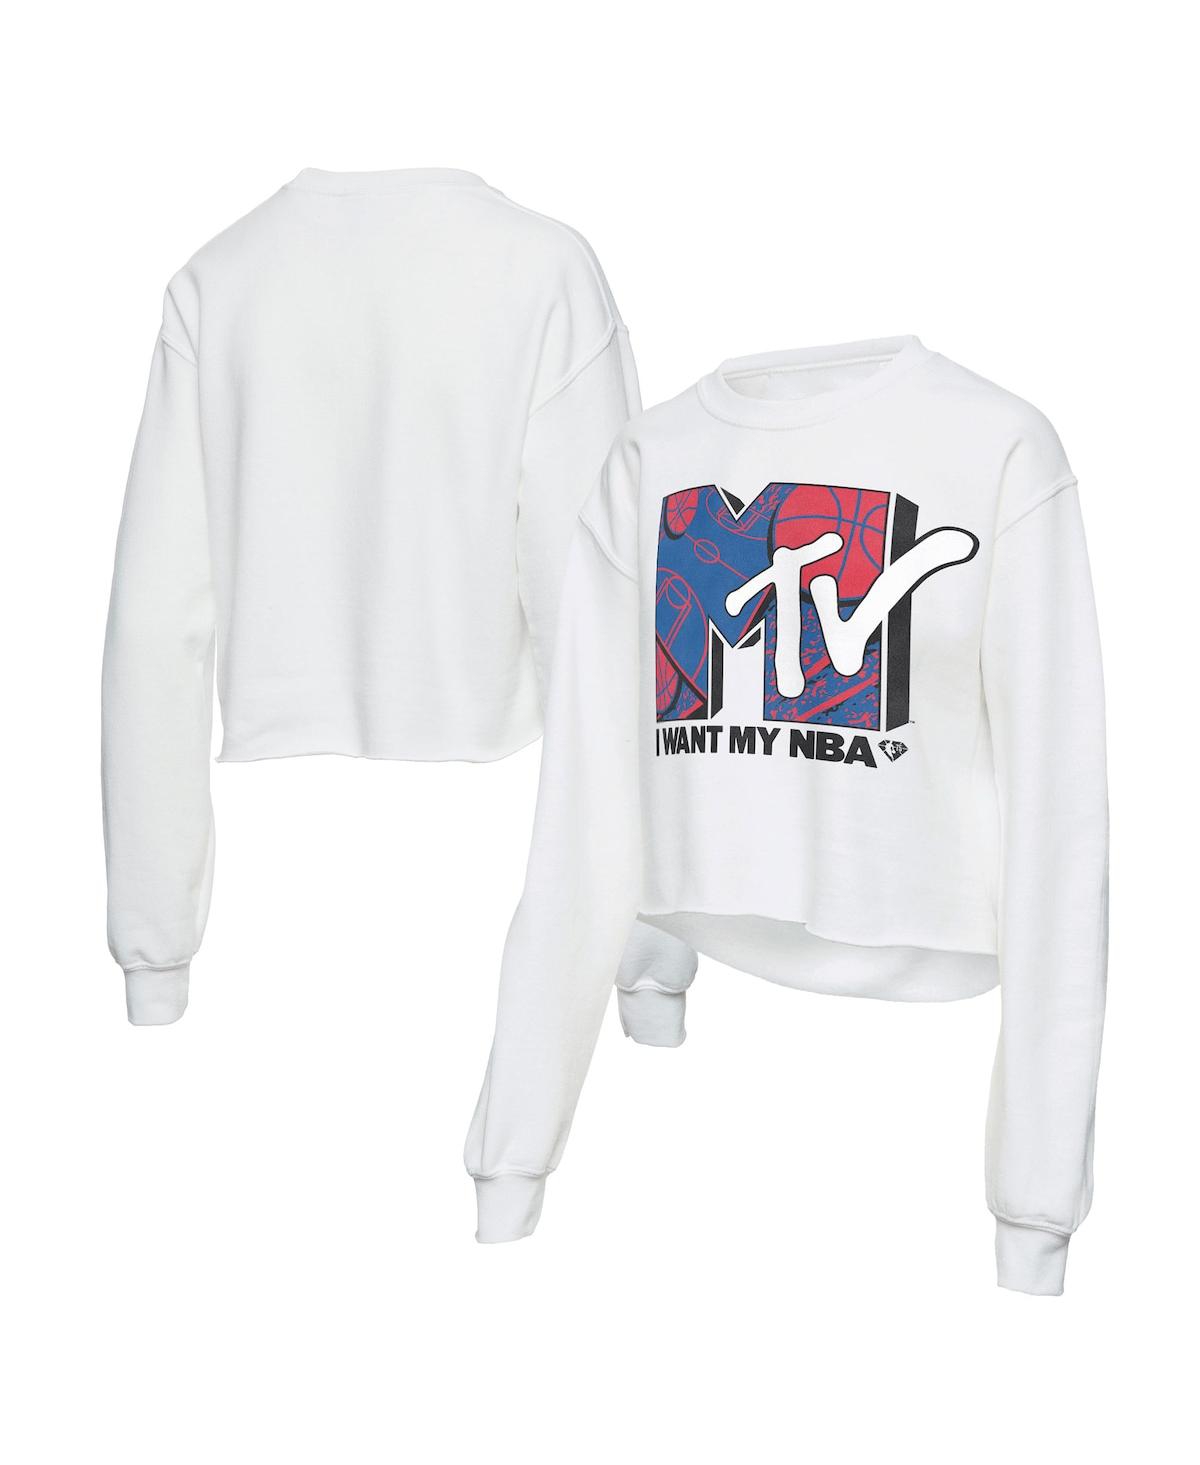 Women's White Nba x Mtv I Want My Cropped Fleece Pullover Sweatshirt - White